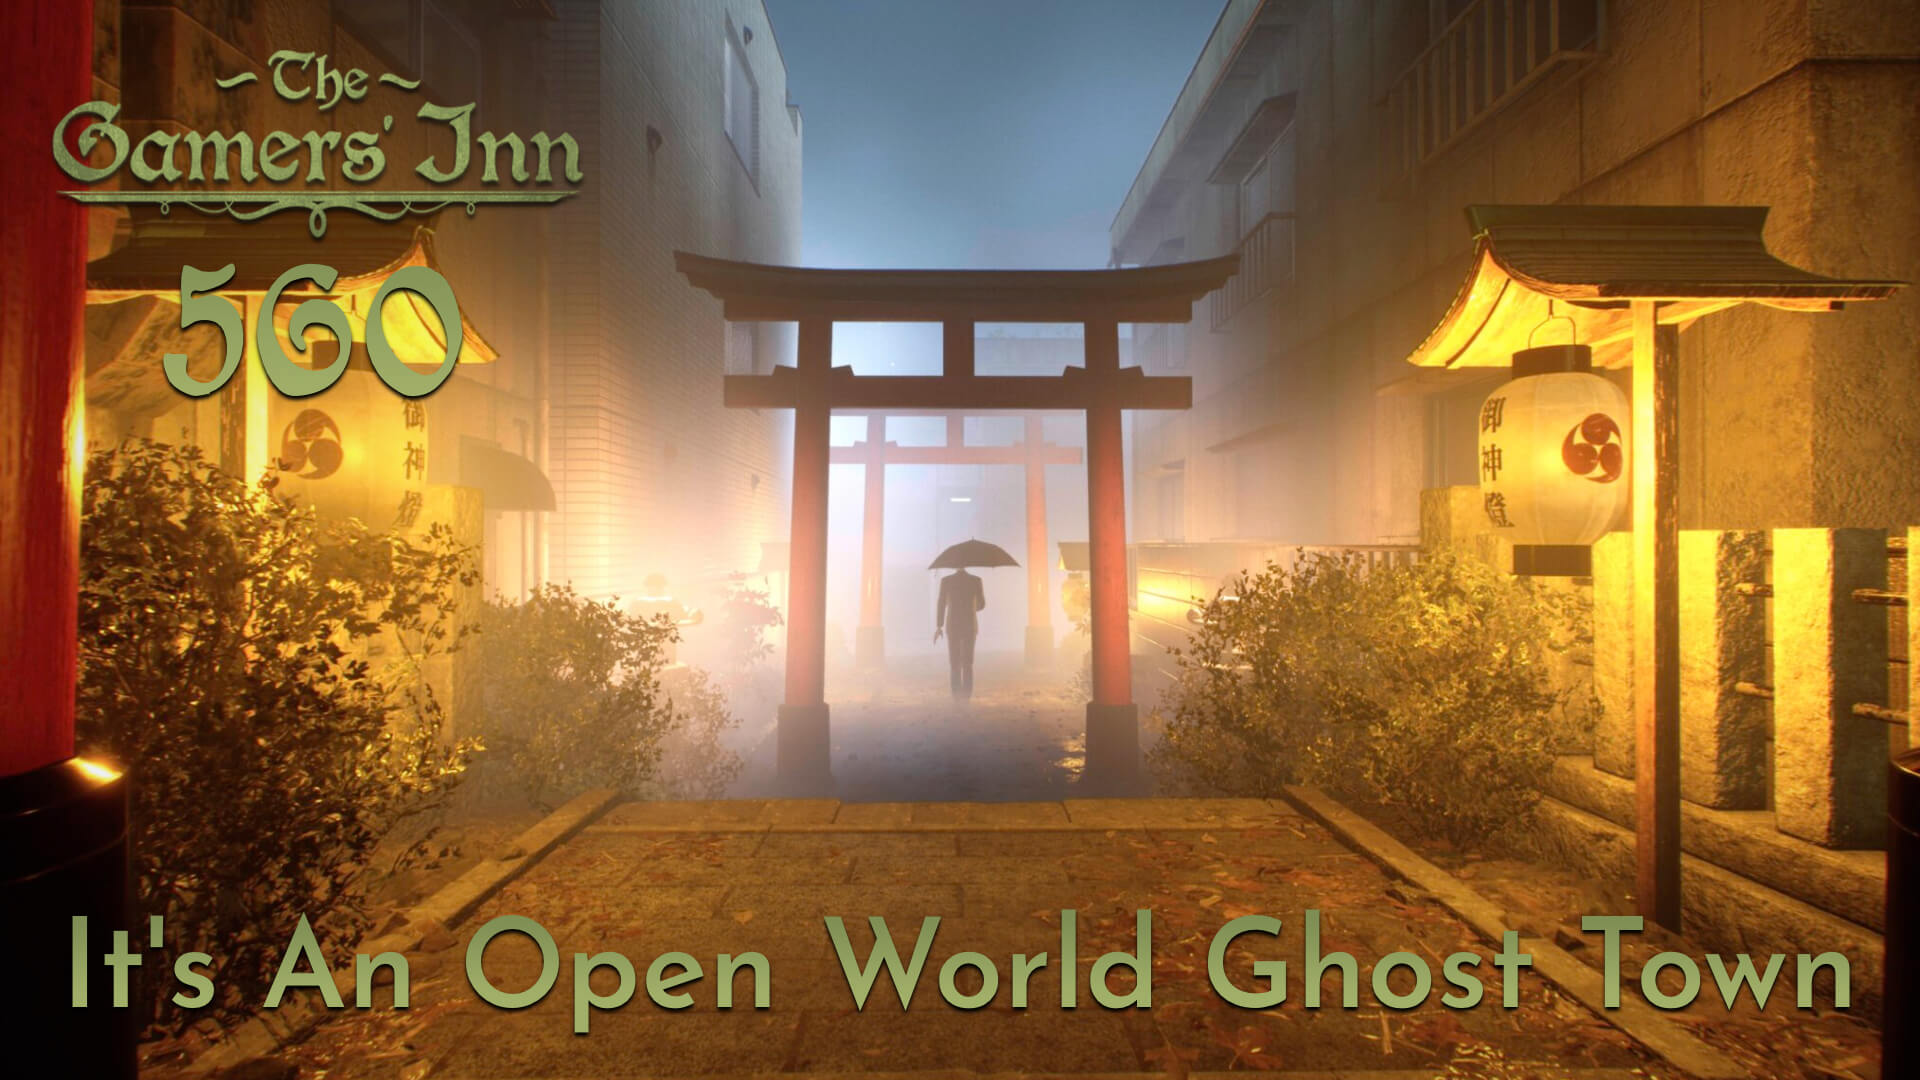 TGI 560 - It's An Open World Ghost Town